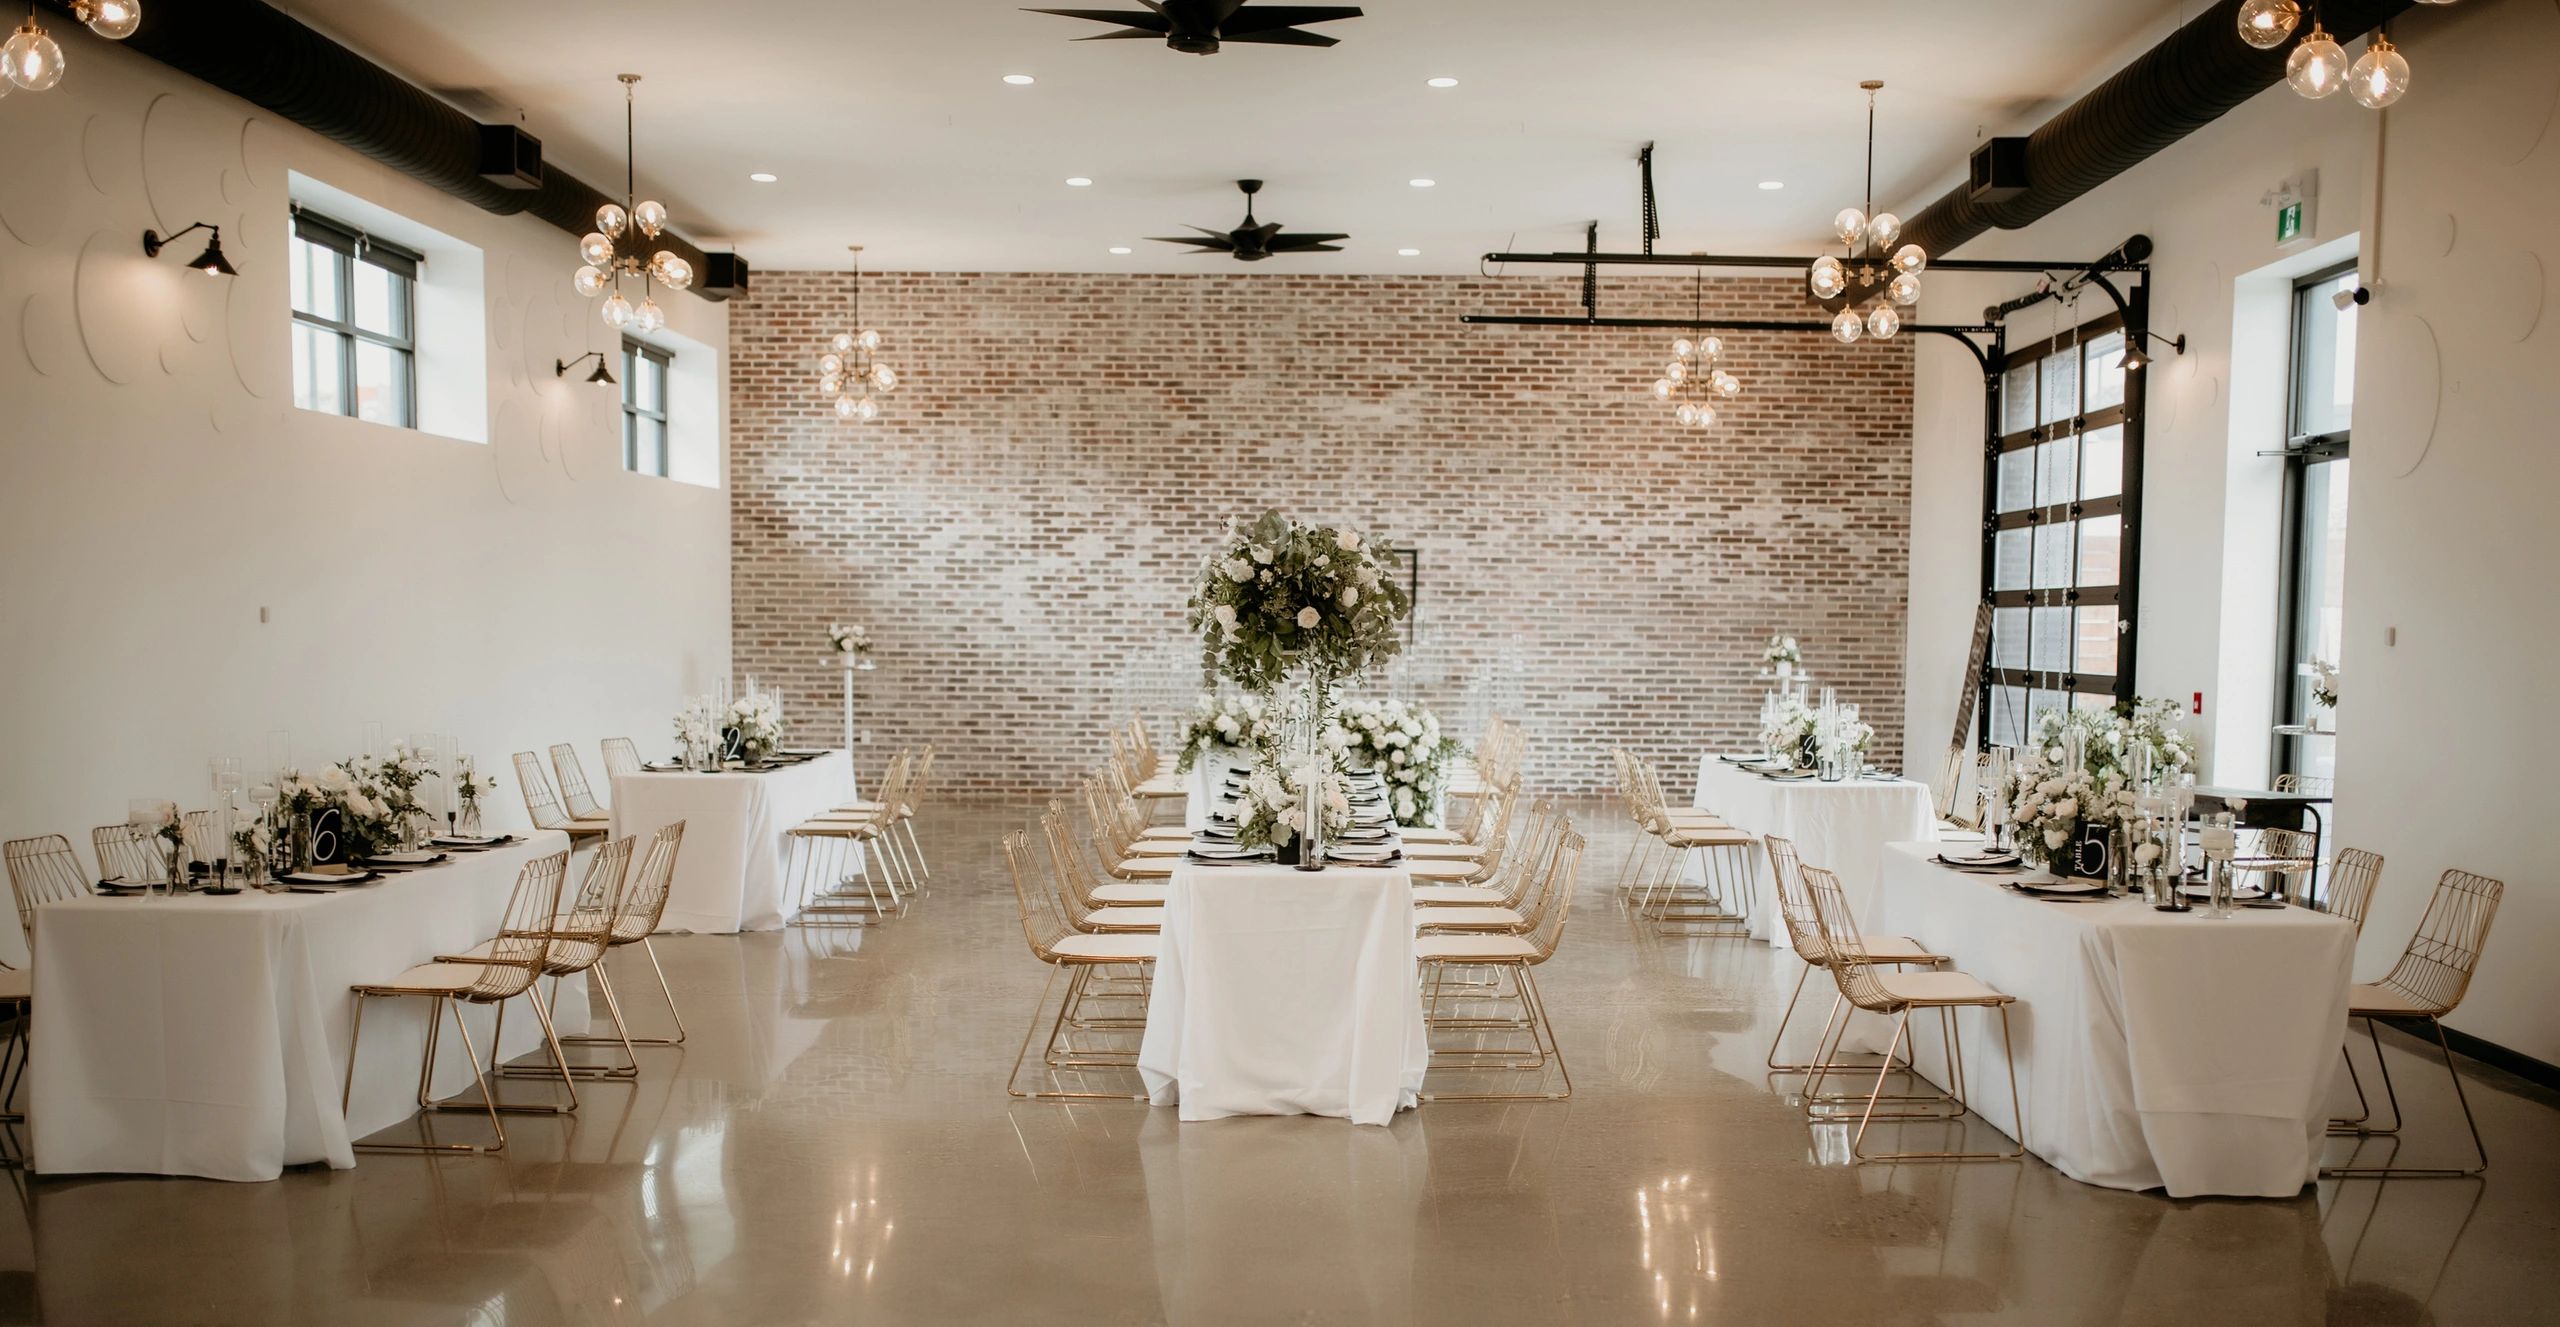 Wedding venue. Rectangular tables. Wedding reception. Wedding flowers. Brick wall. Loft venue.